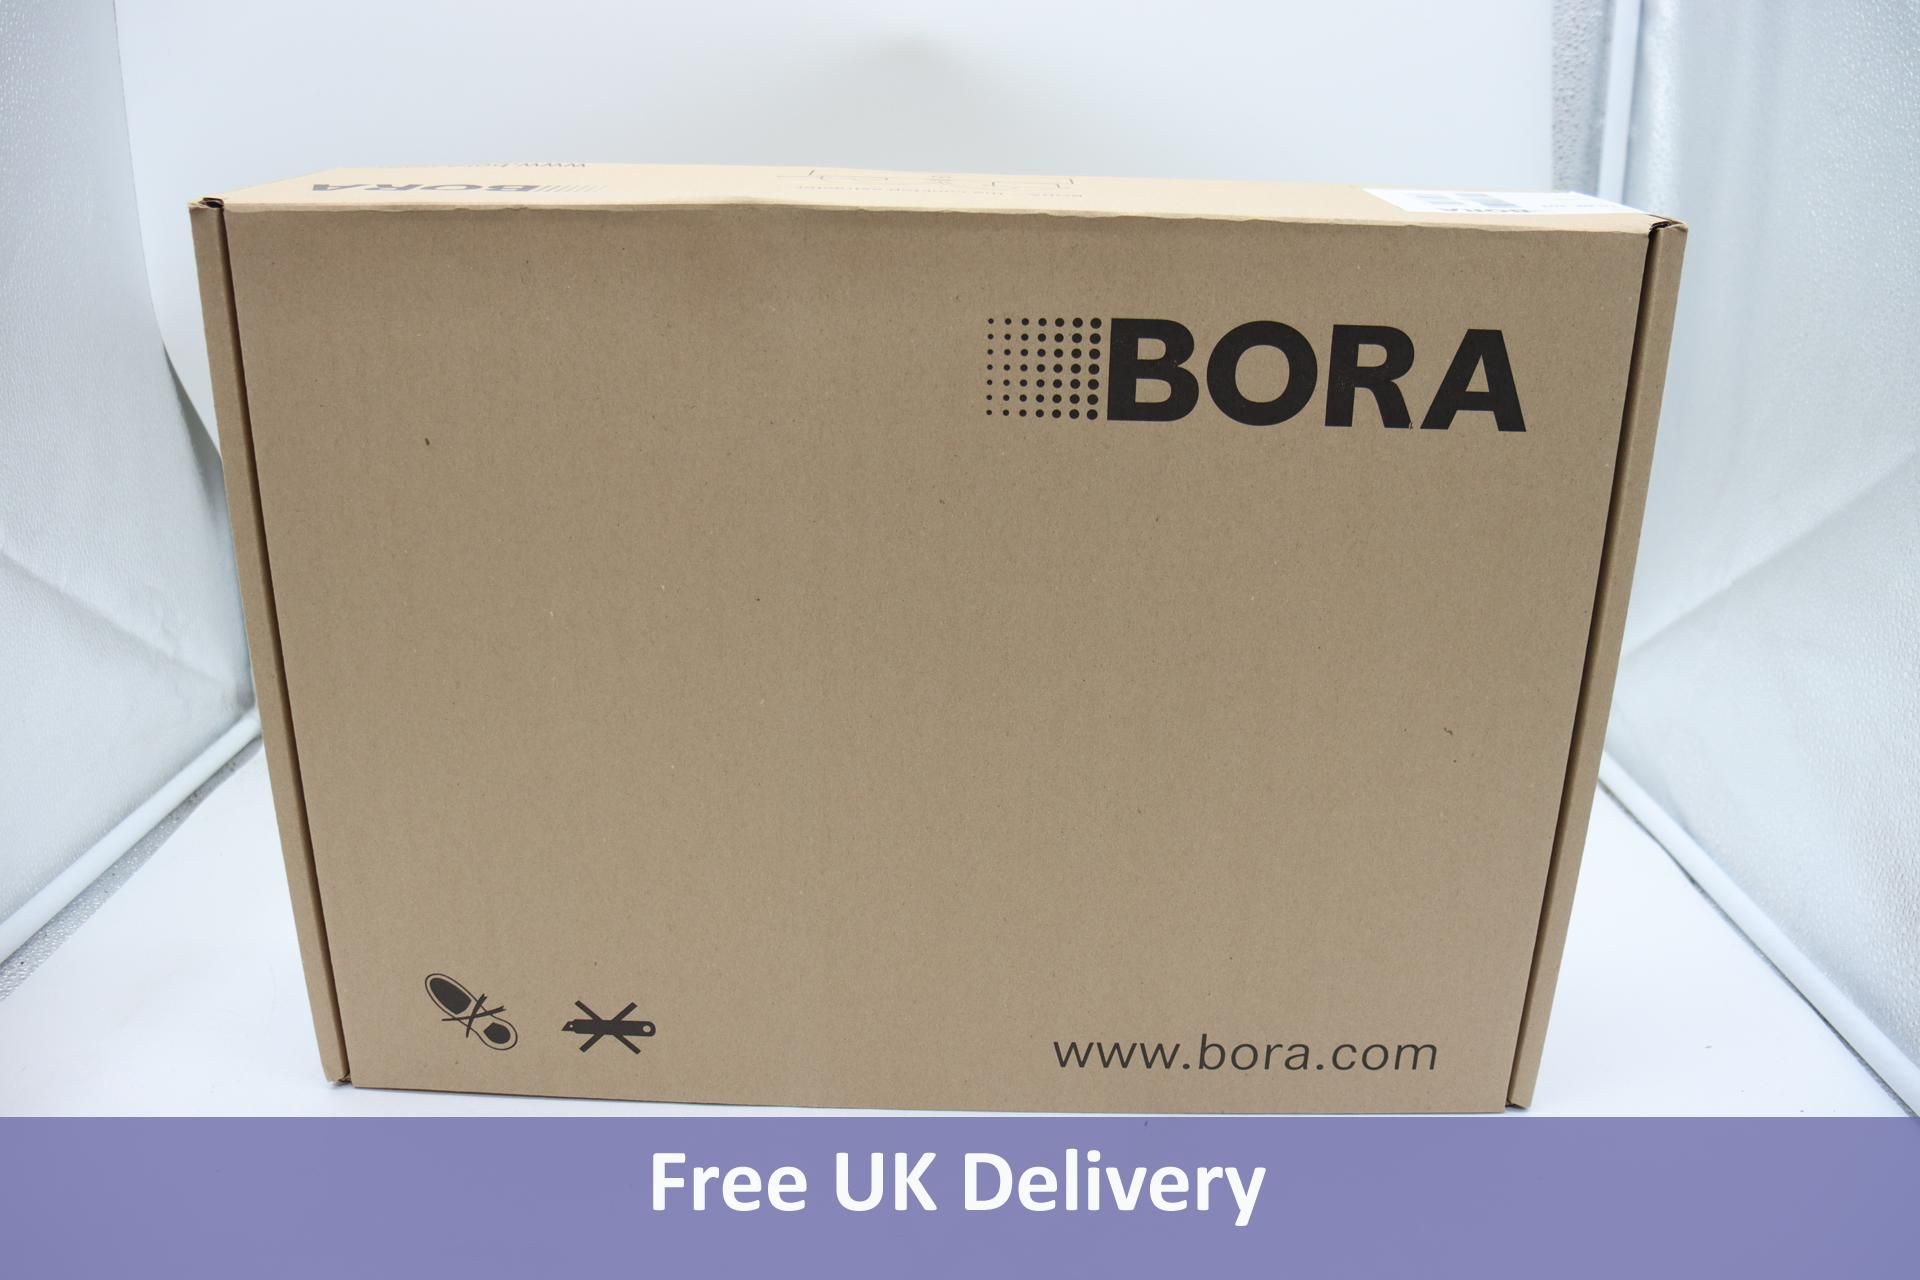 Bora ULBF Air Purification Box